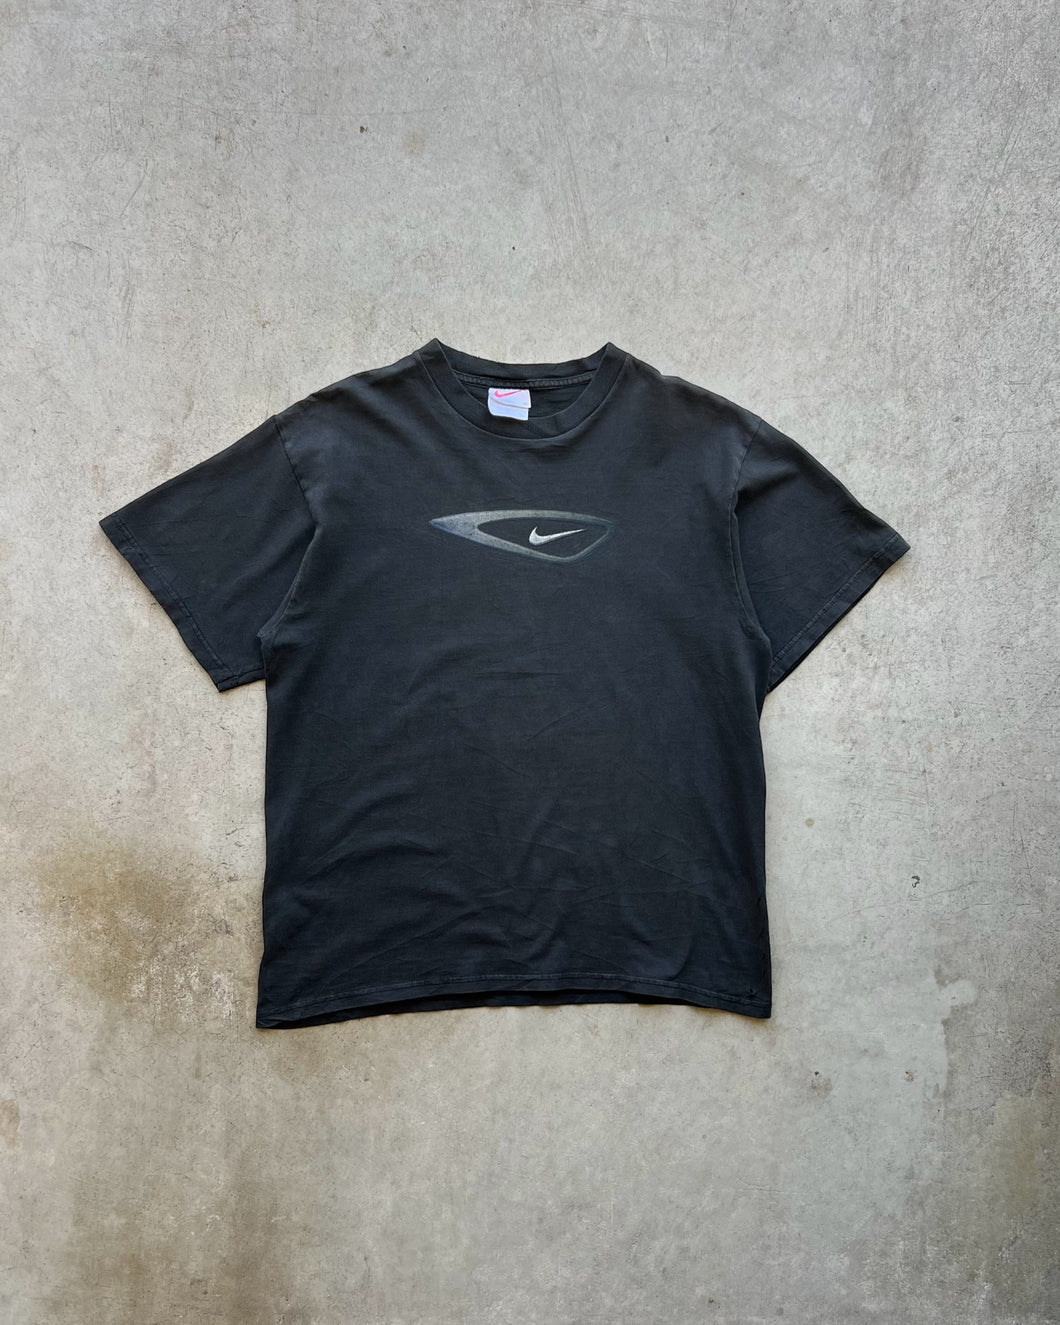 Vintage Black Nike Swoosh Air Faded T shirt - M